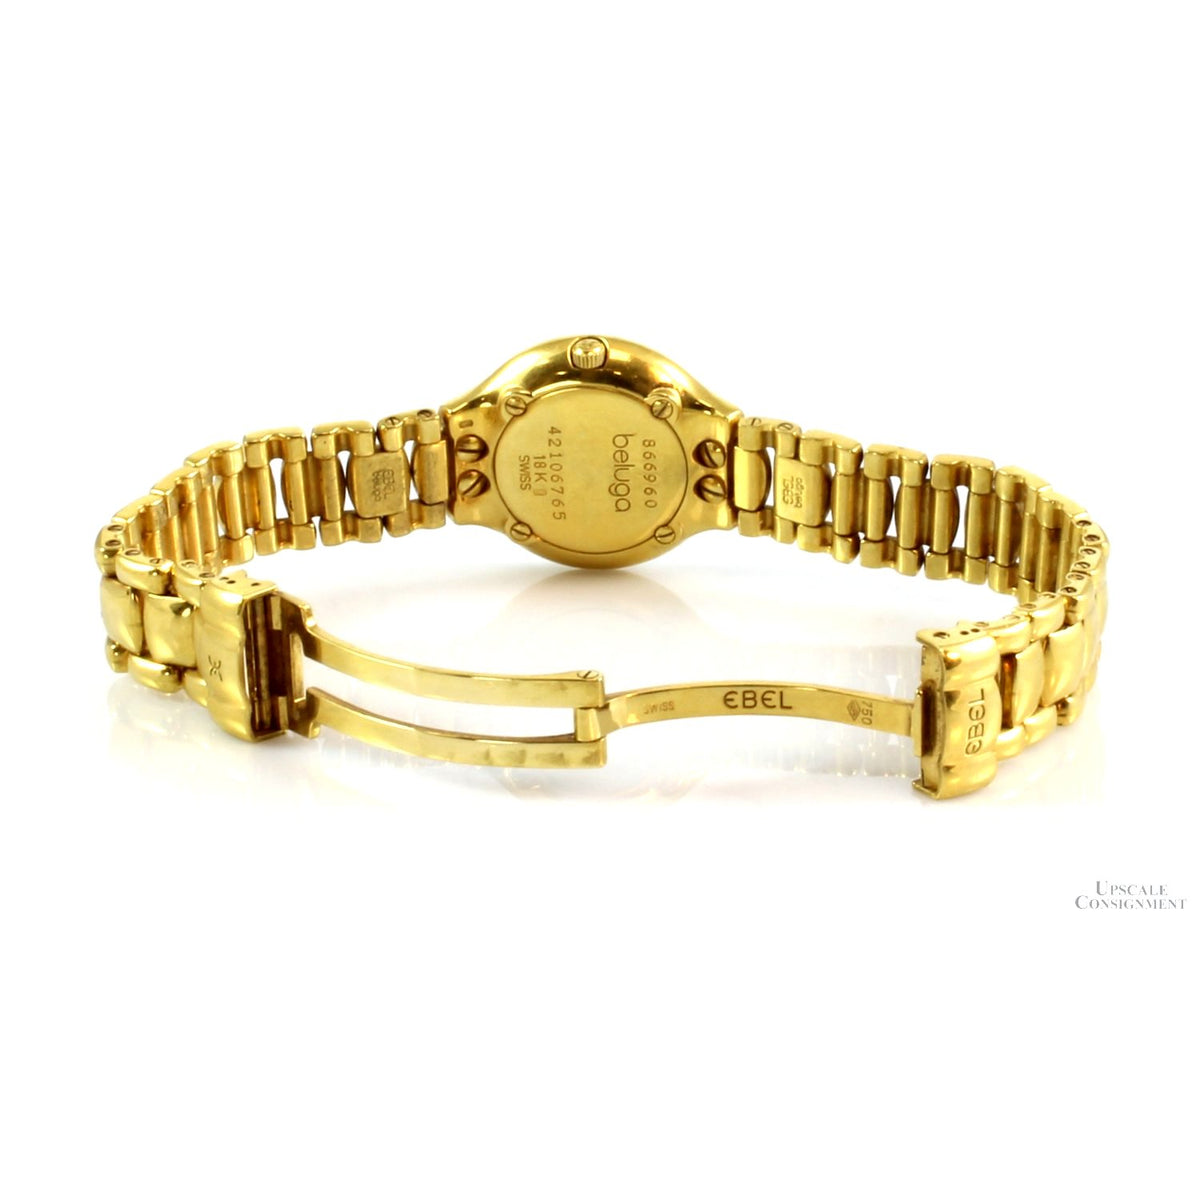 EBEL Swiss Luxury 18K Gold Lady's Quartz Wristwatch Blue MOP .057ctw Diamond